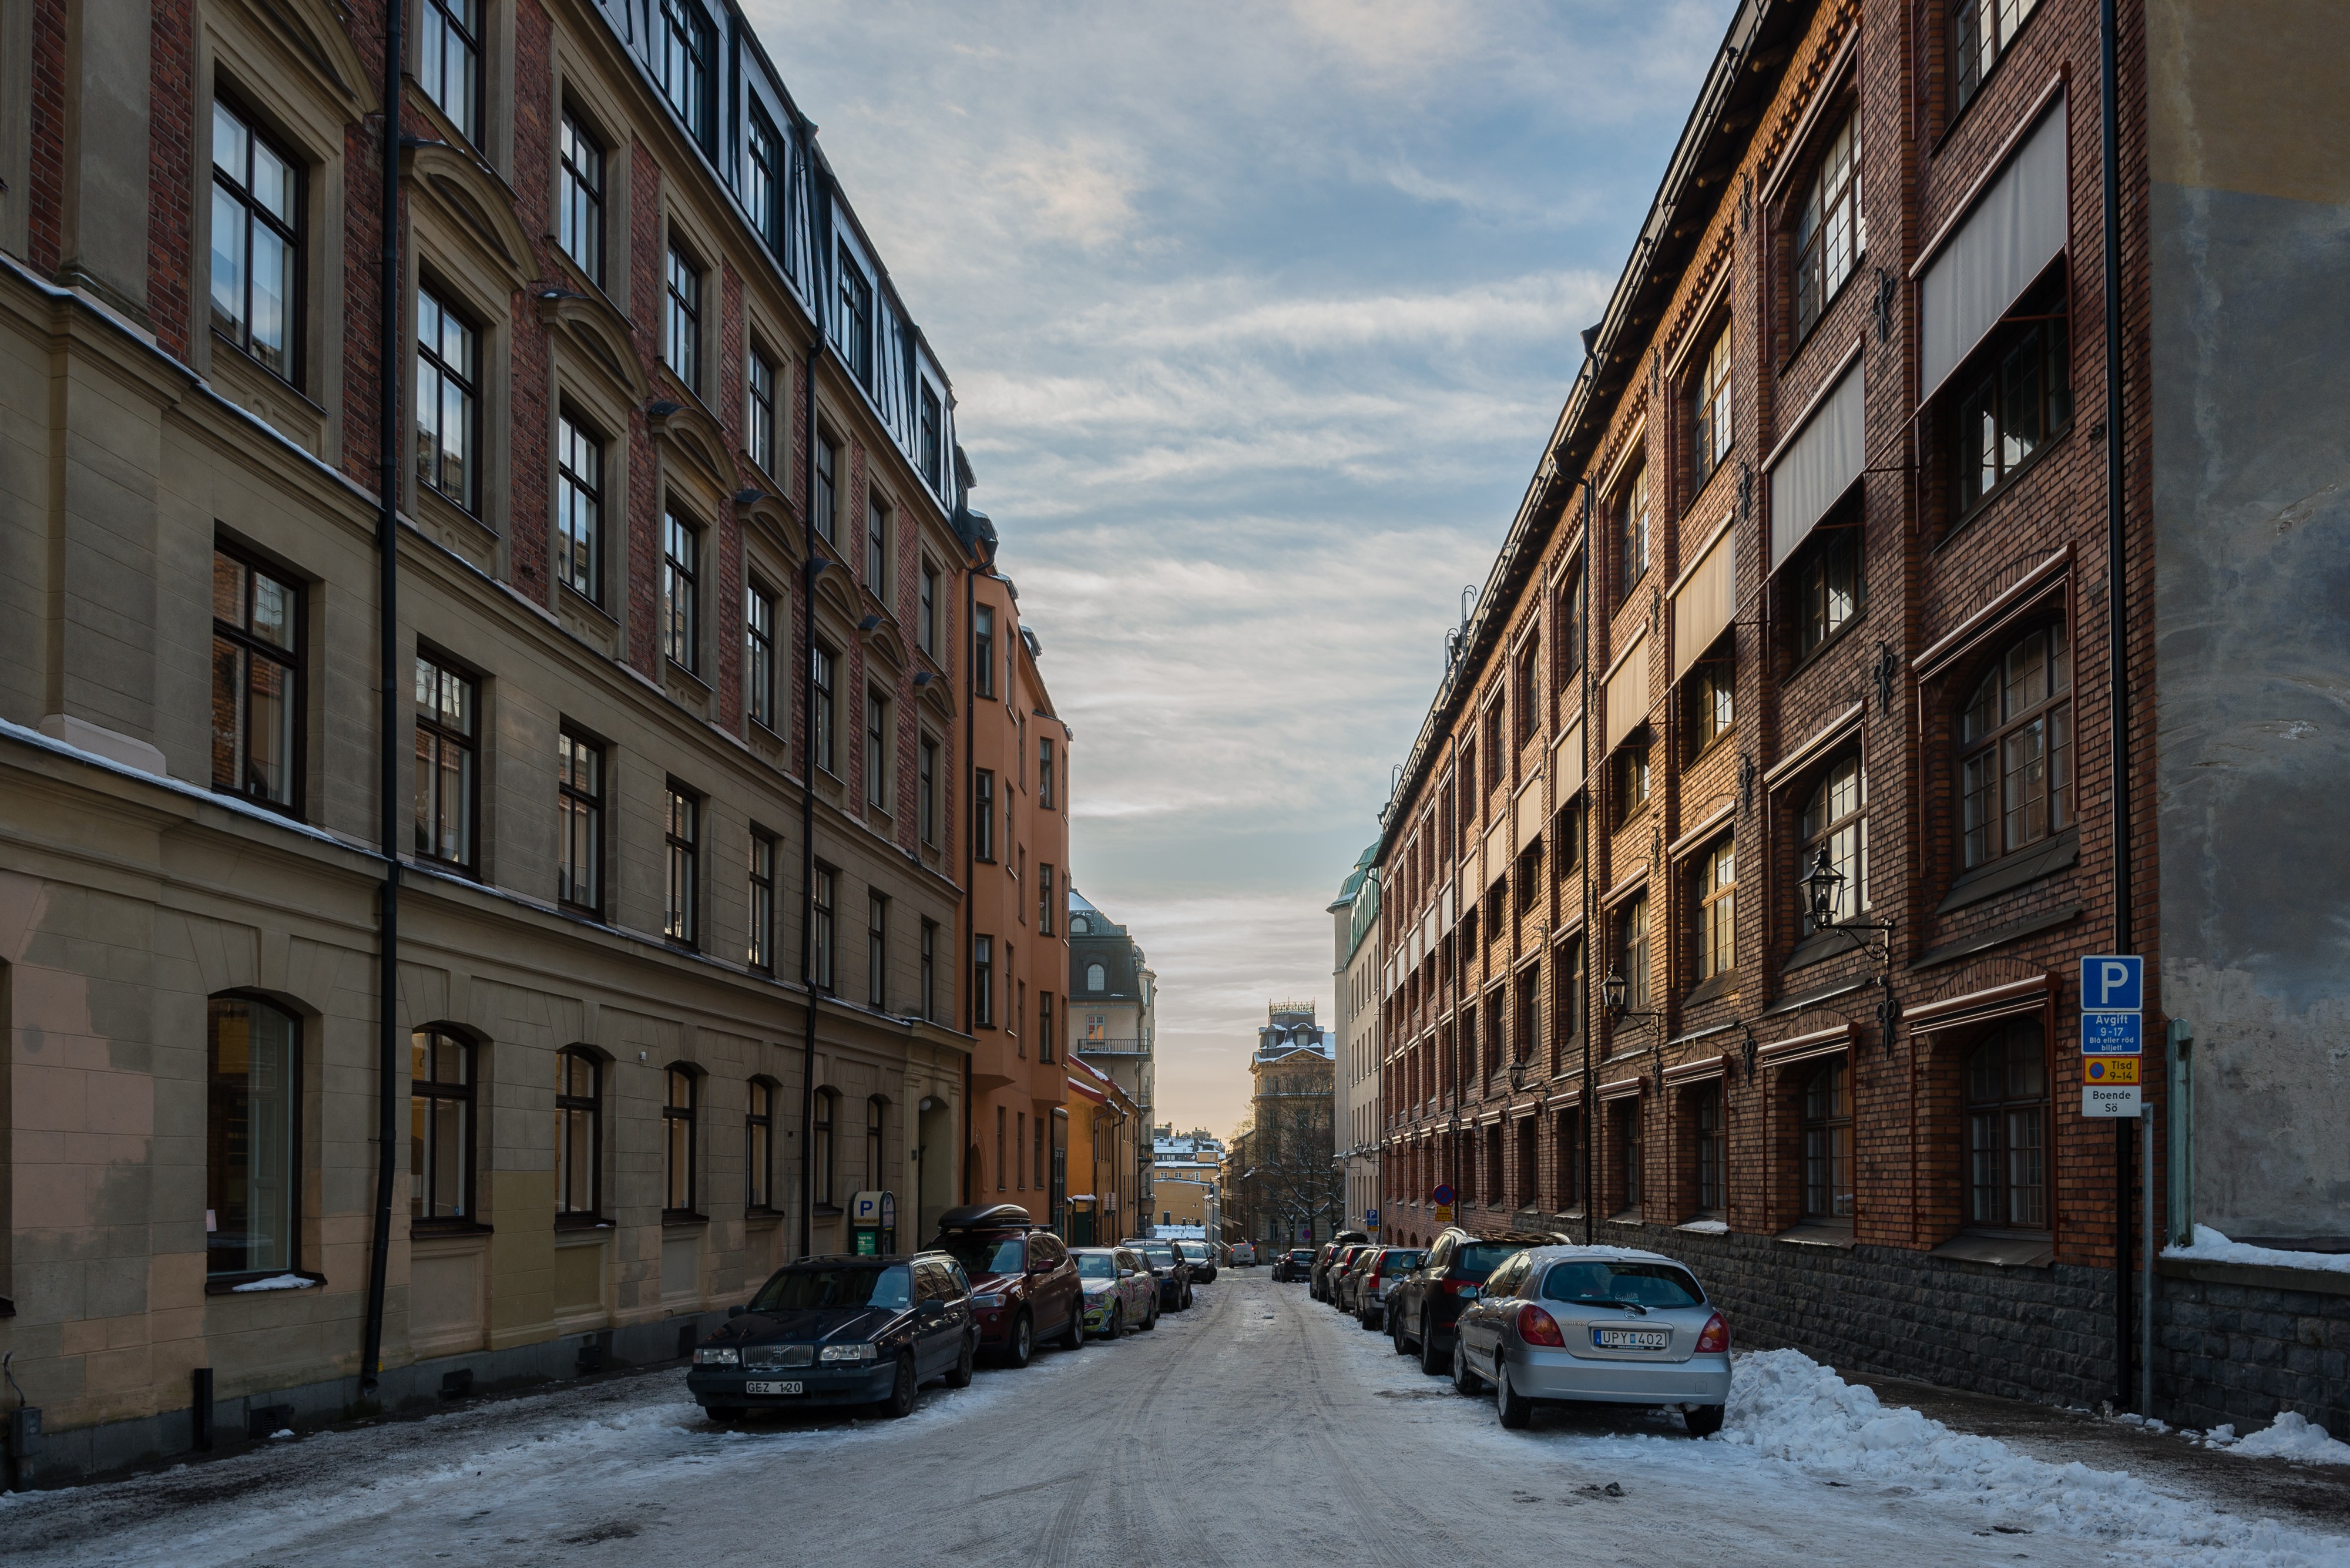 Svartensgatan February 2015